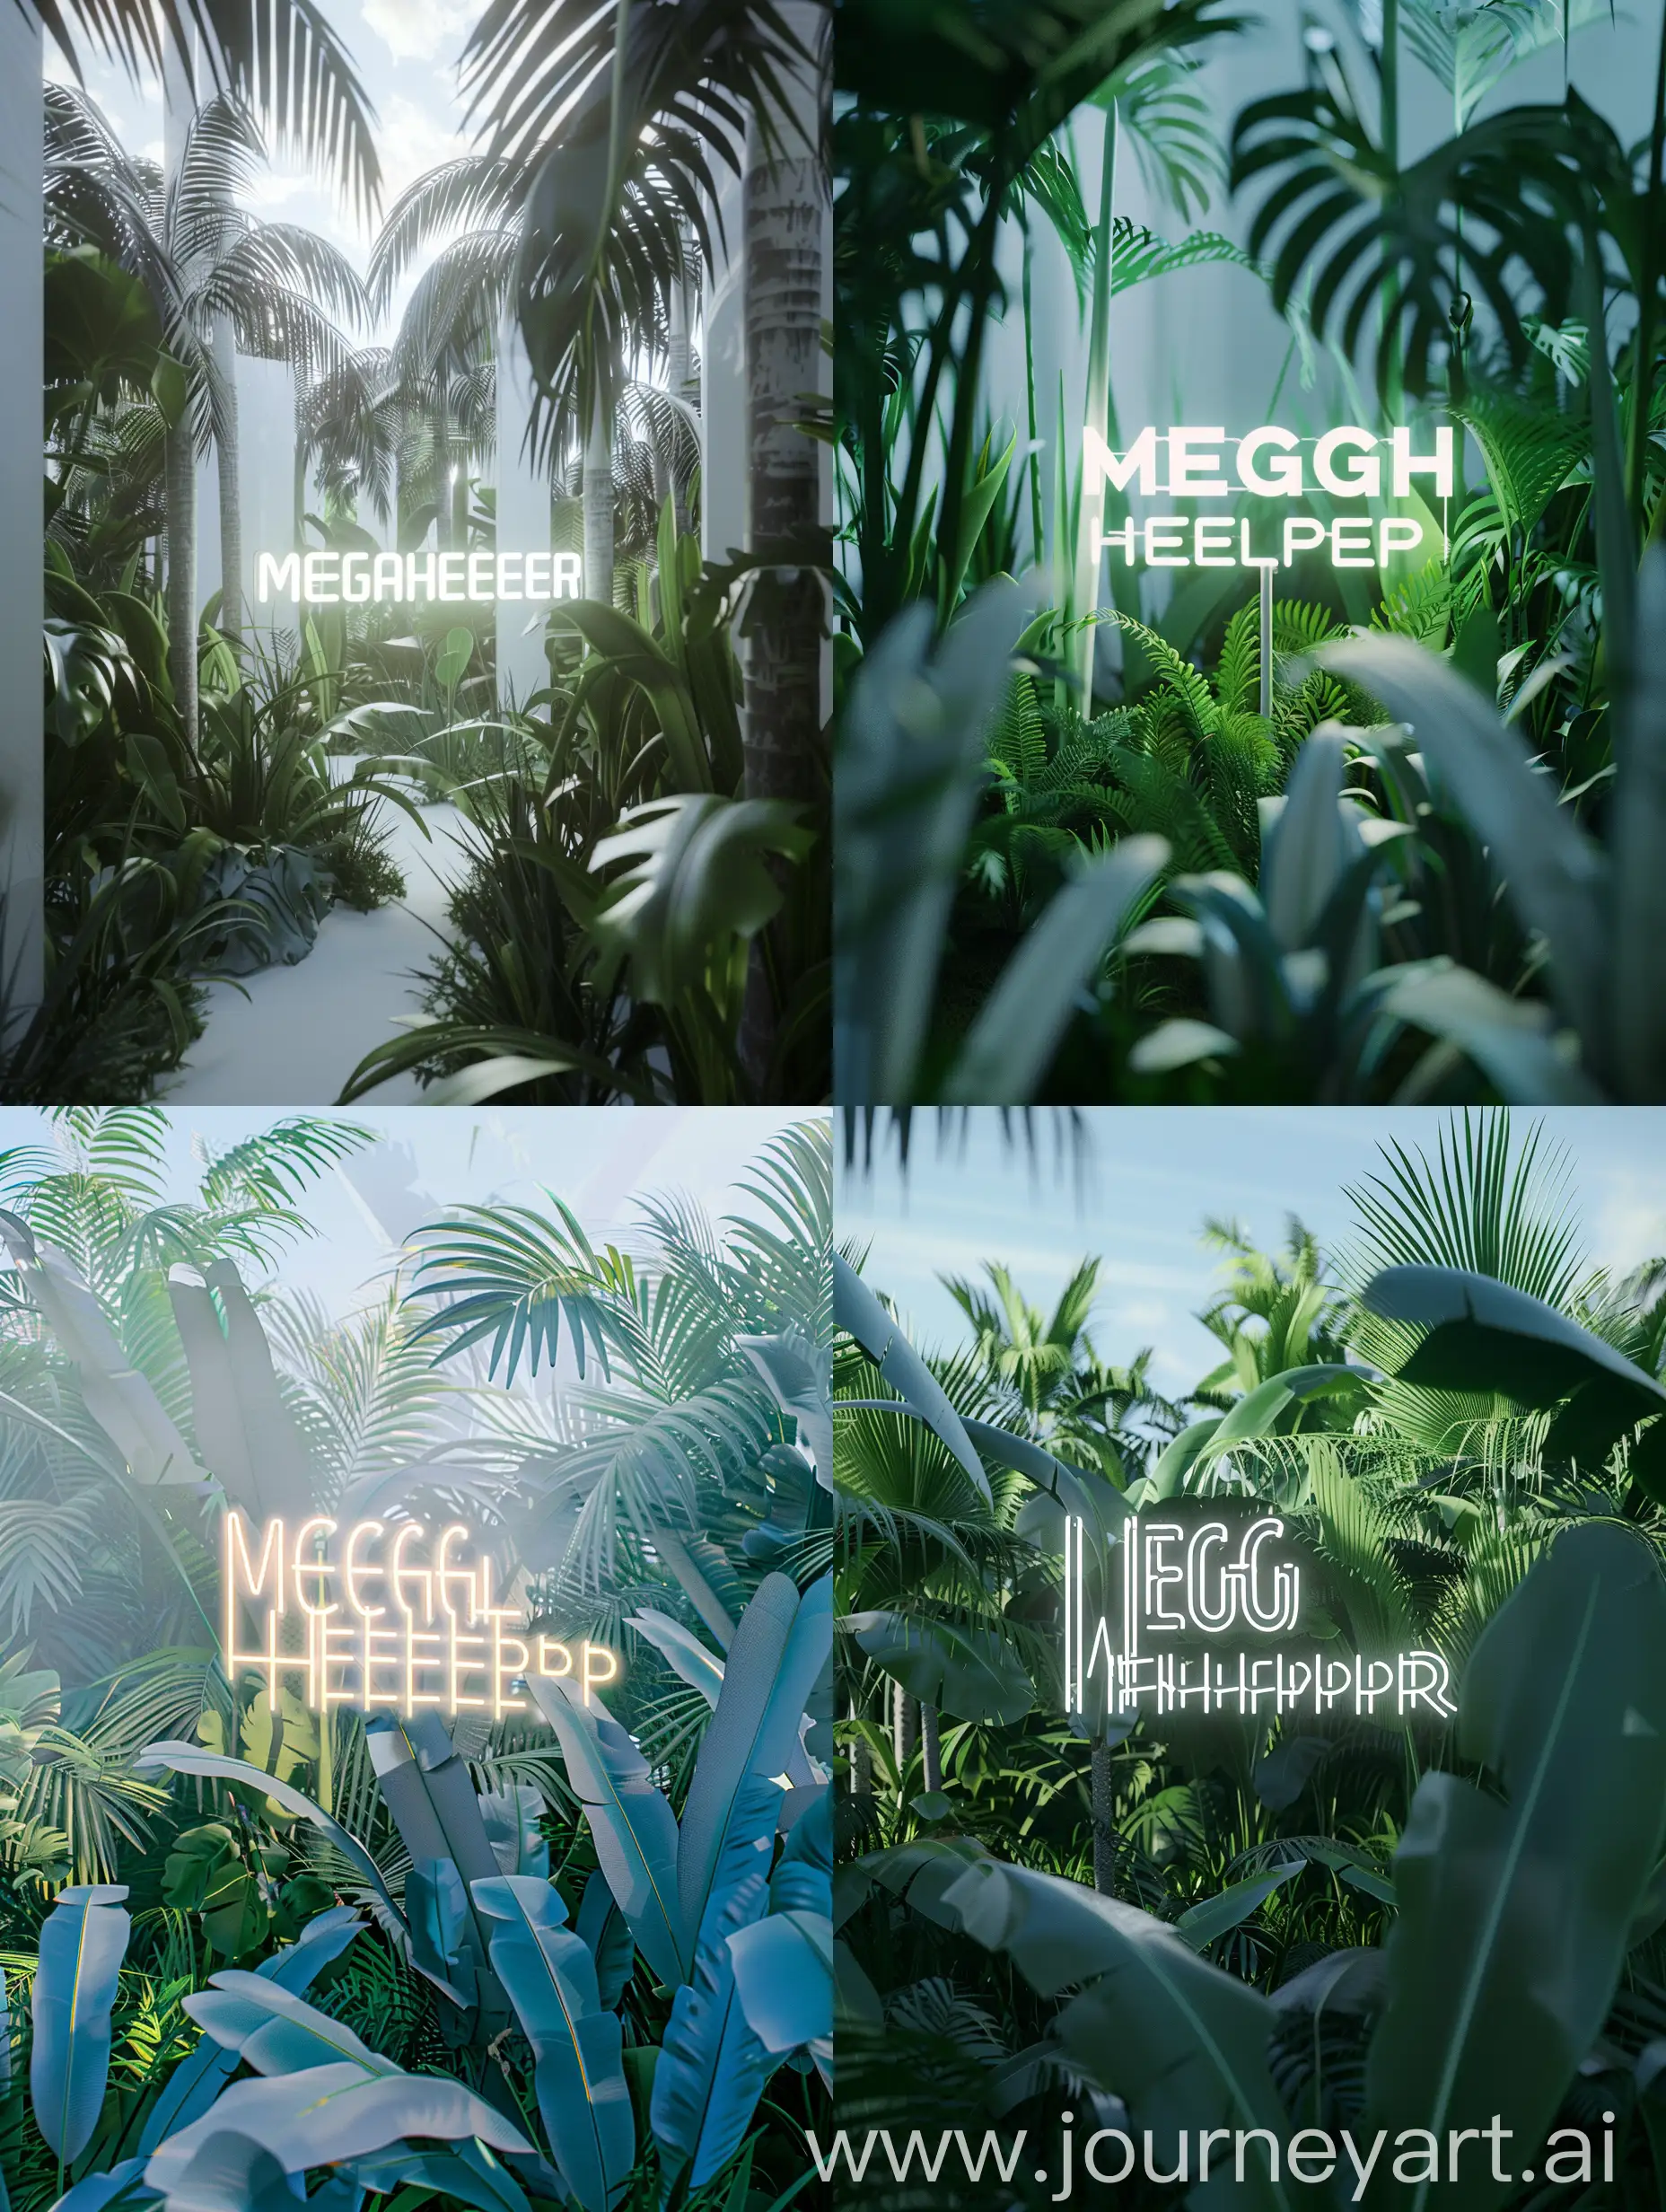 Urban-Neon-Sign-MEGAHELPER-in-Vibrant-White-with-Lush-Vegetation-Background